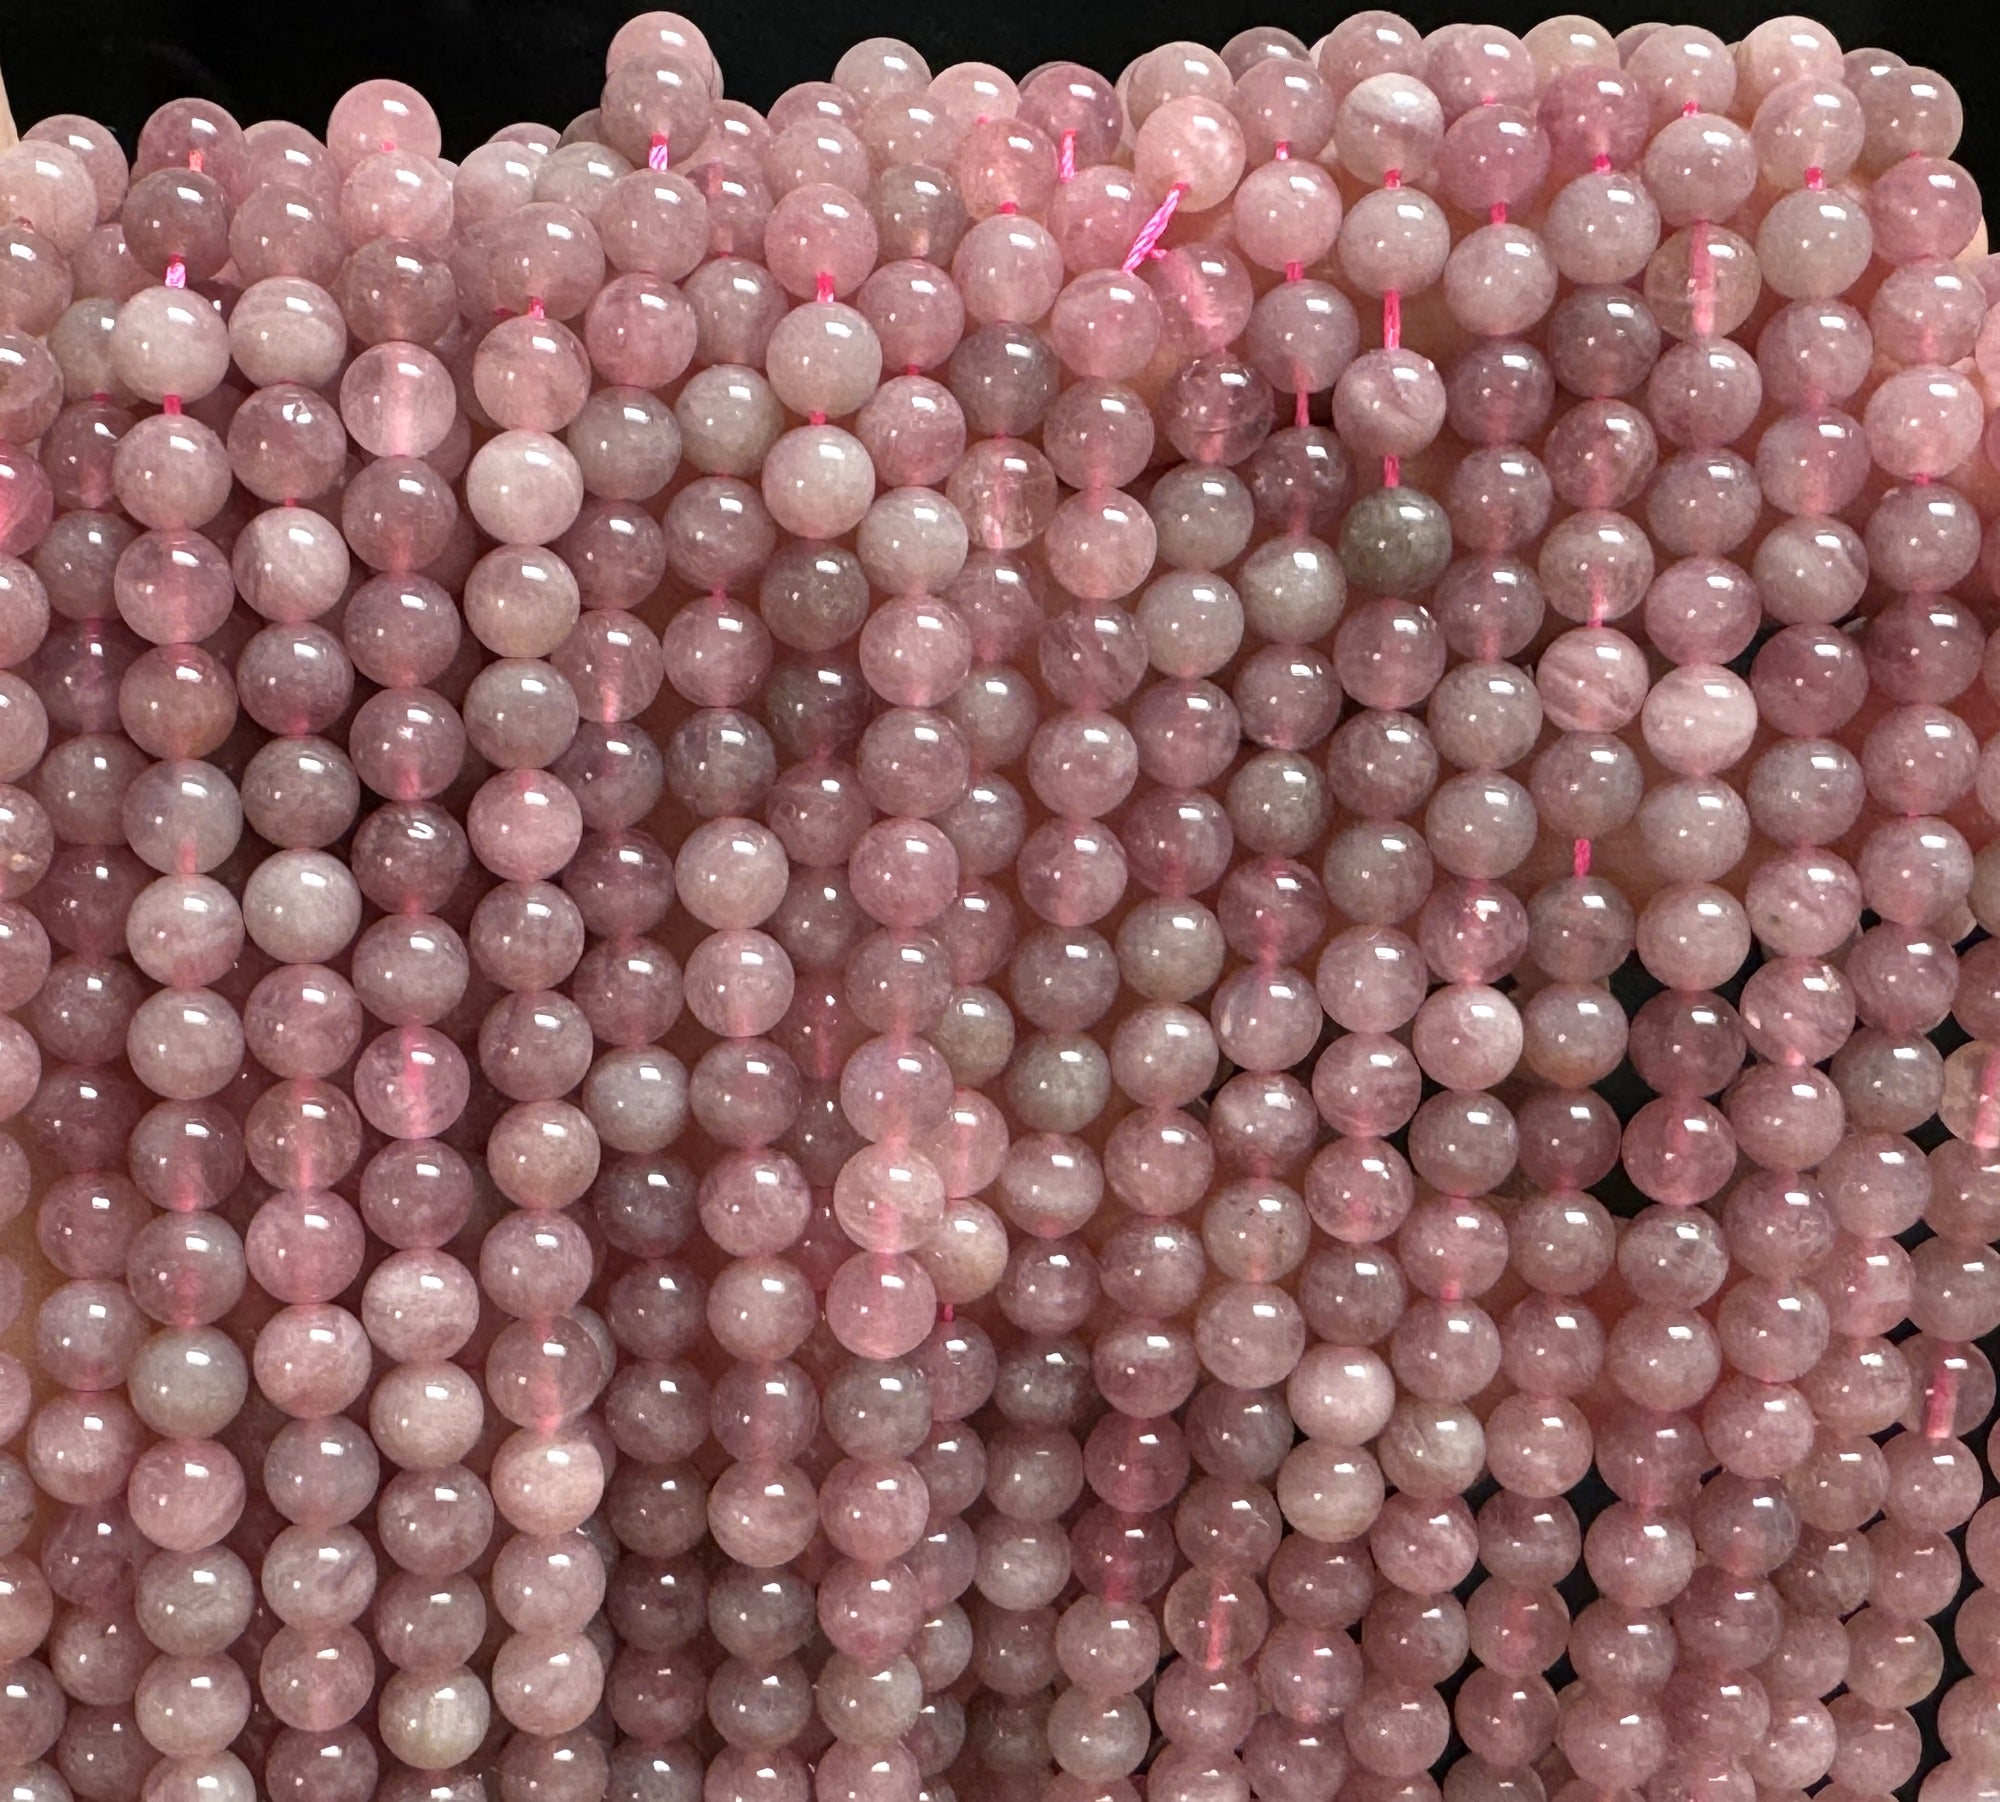 Mauve Pink Madagascan Rose Quartz 6mm round natural gemstone beads 15.5" strand